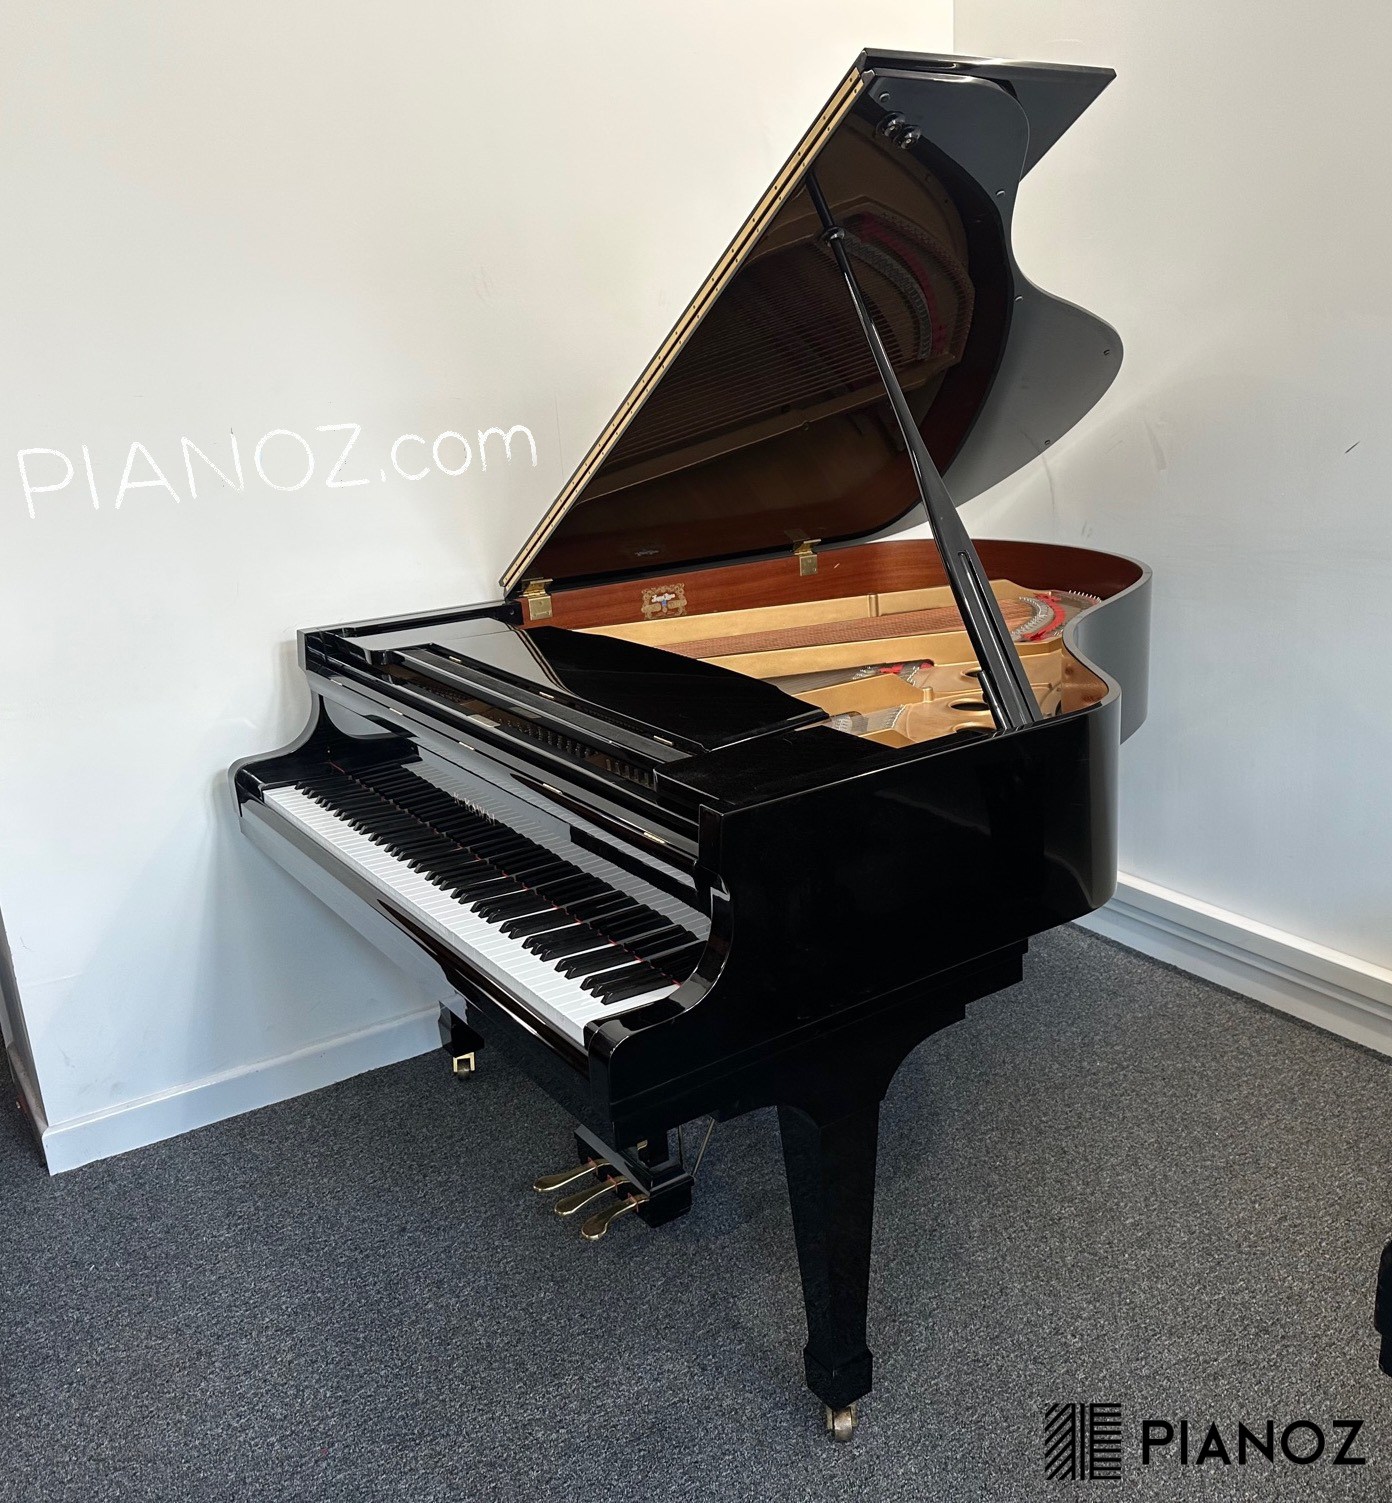 Kawai GS30 Grand Piano piano for sale in UK